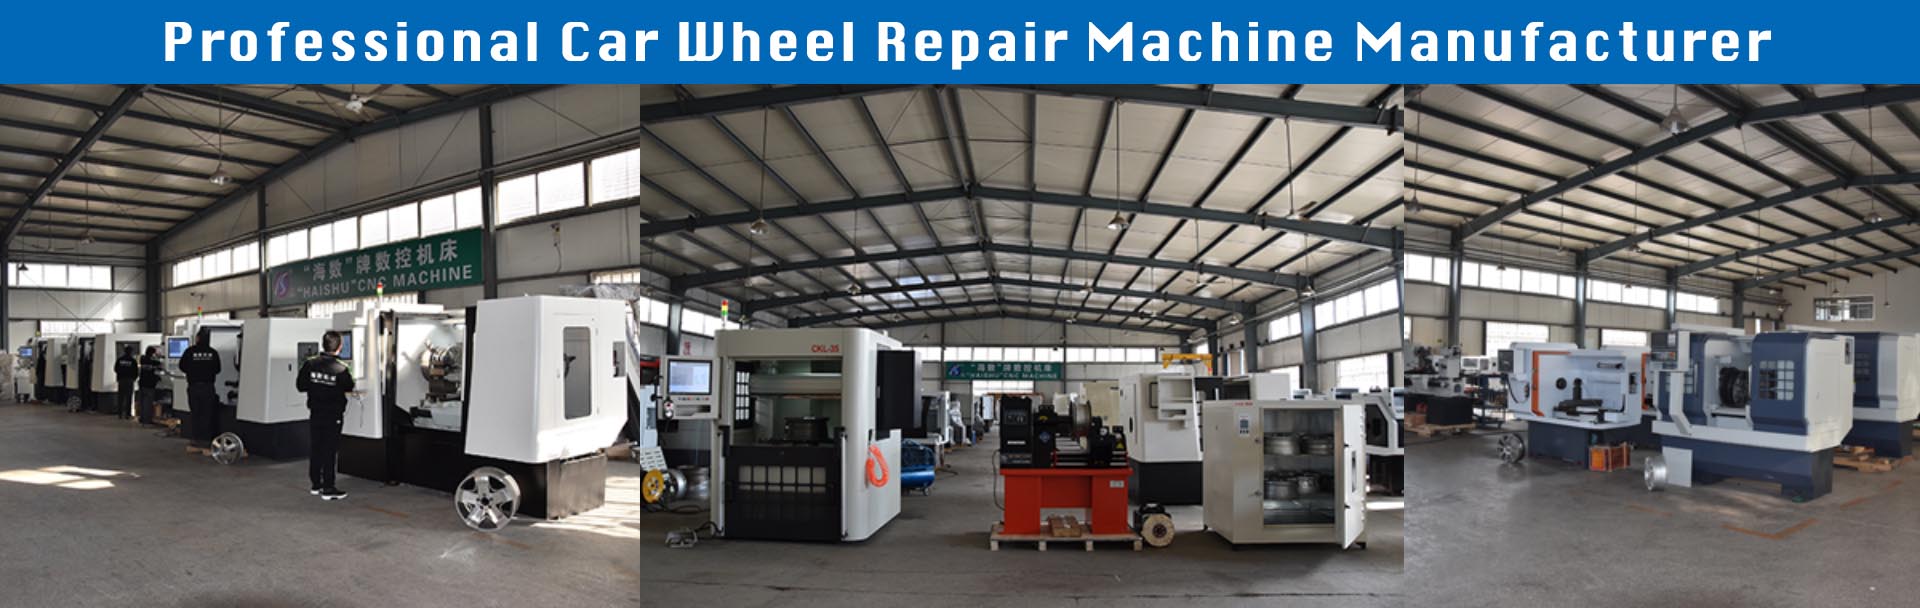 Professional Car Wheel Repair Lathe Manufacturer